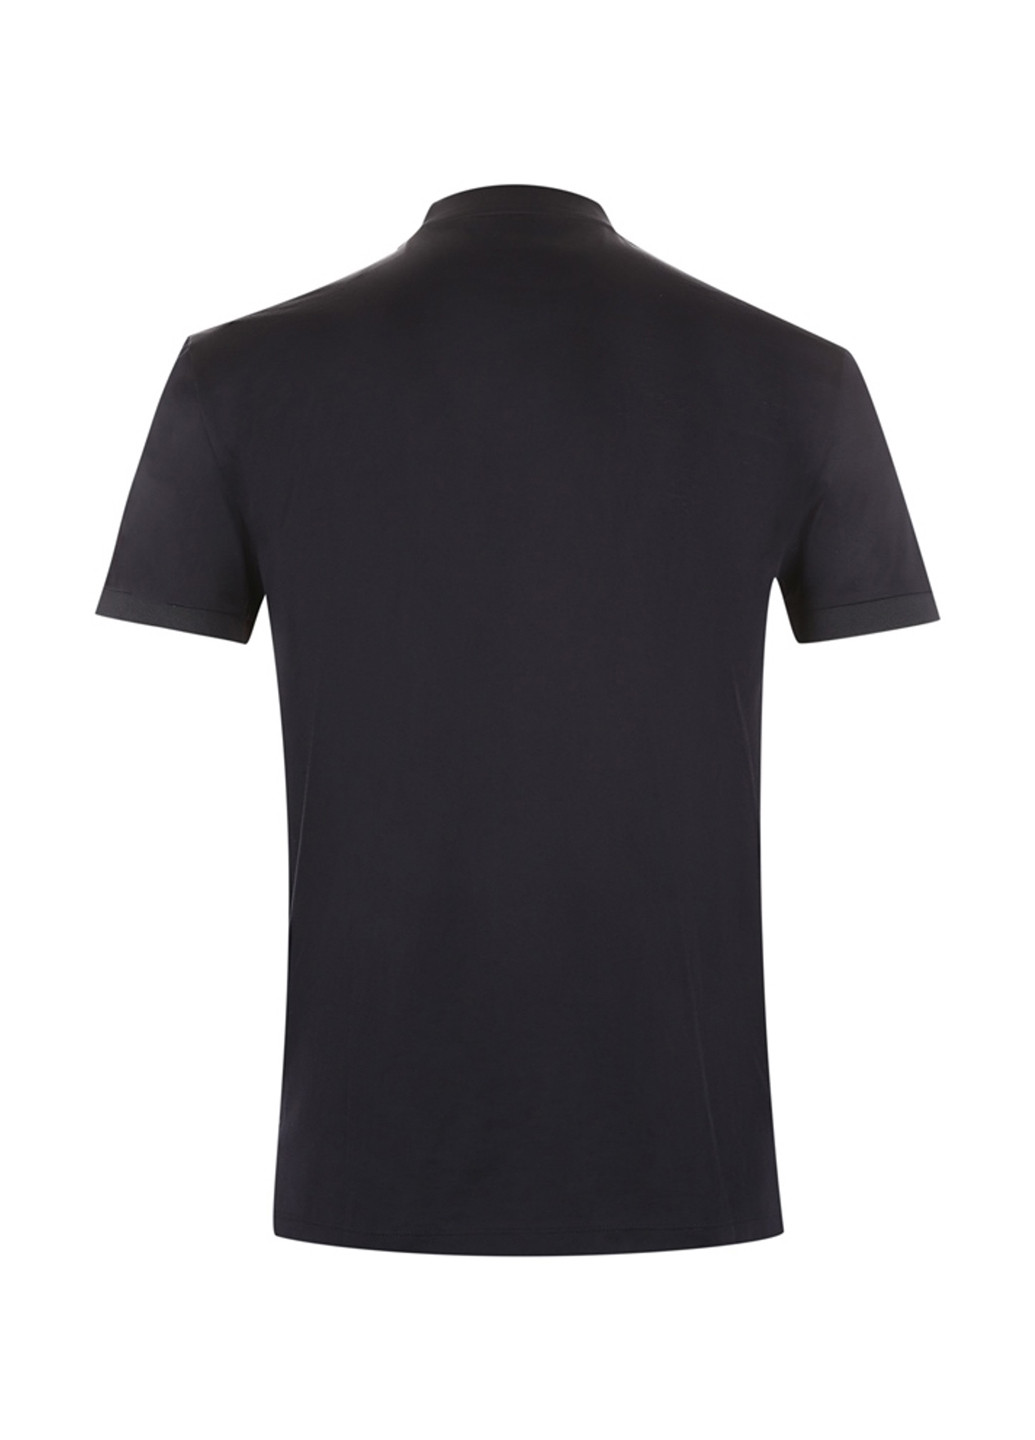 Темно-синяя футболка-поло для мужчин Jack & Jones с геометрическим узором